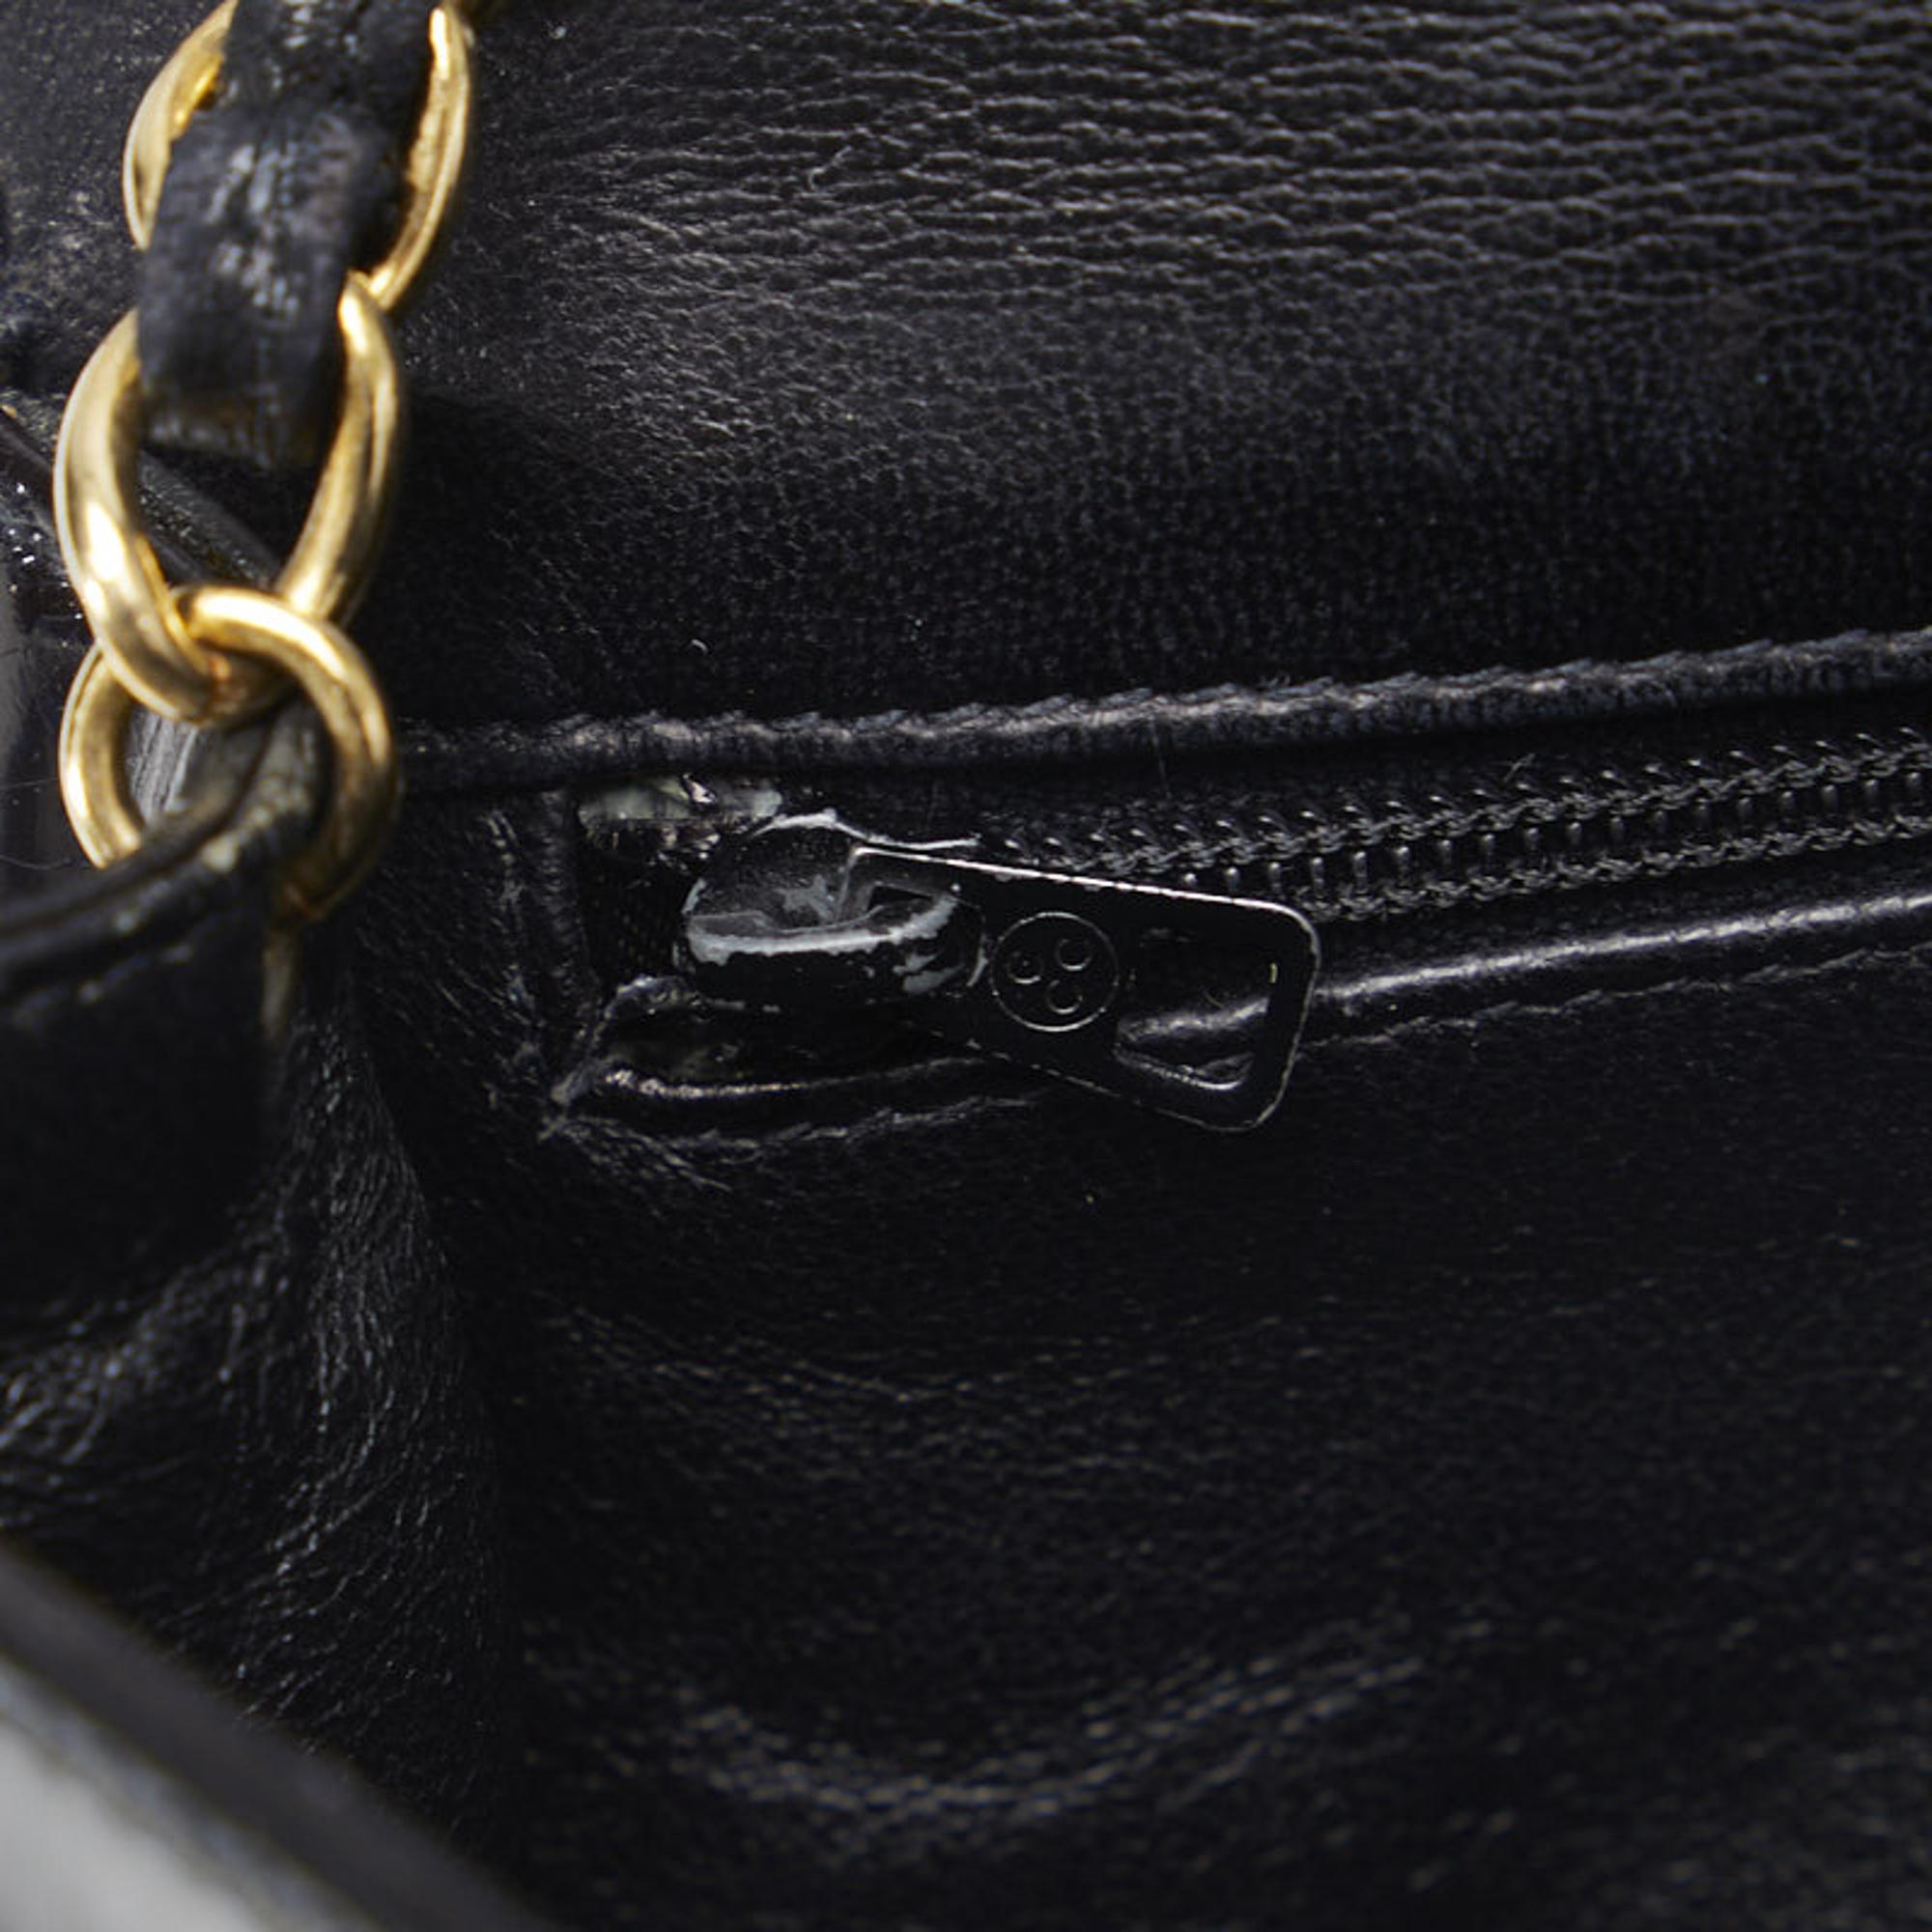 Chanel Black Patent Leather Vintage Half Moon Flap Bag